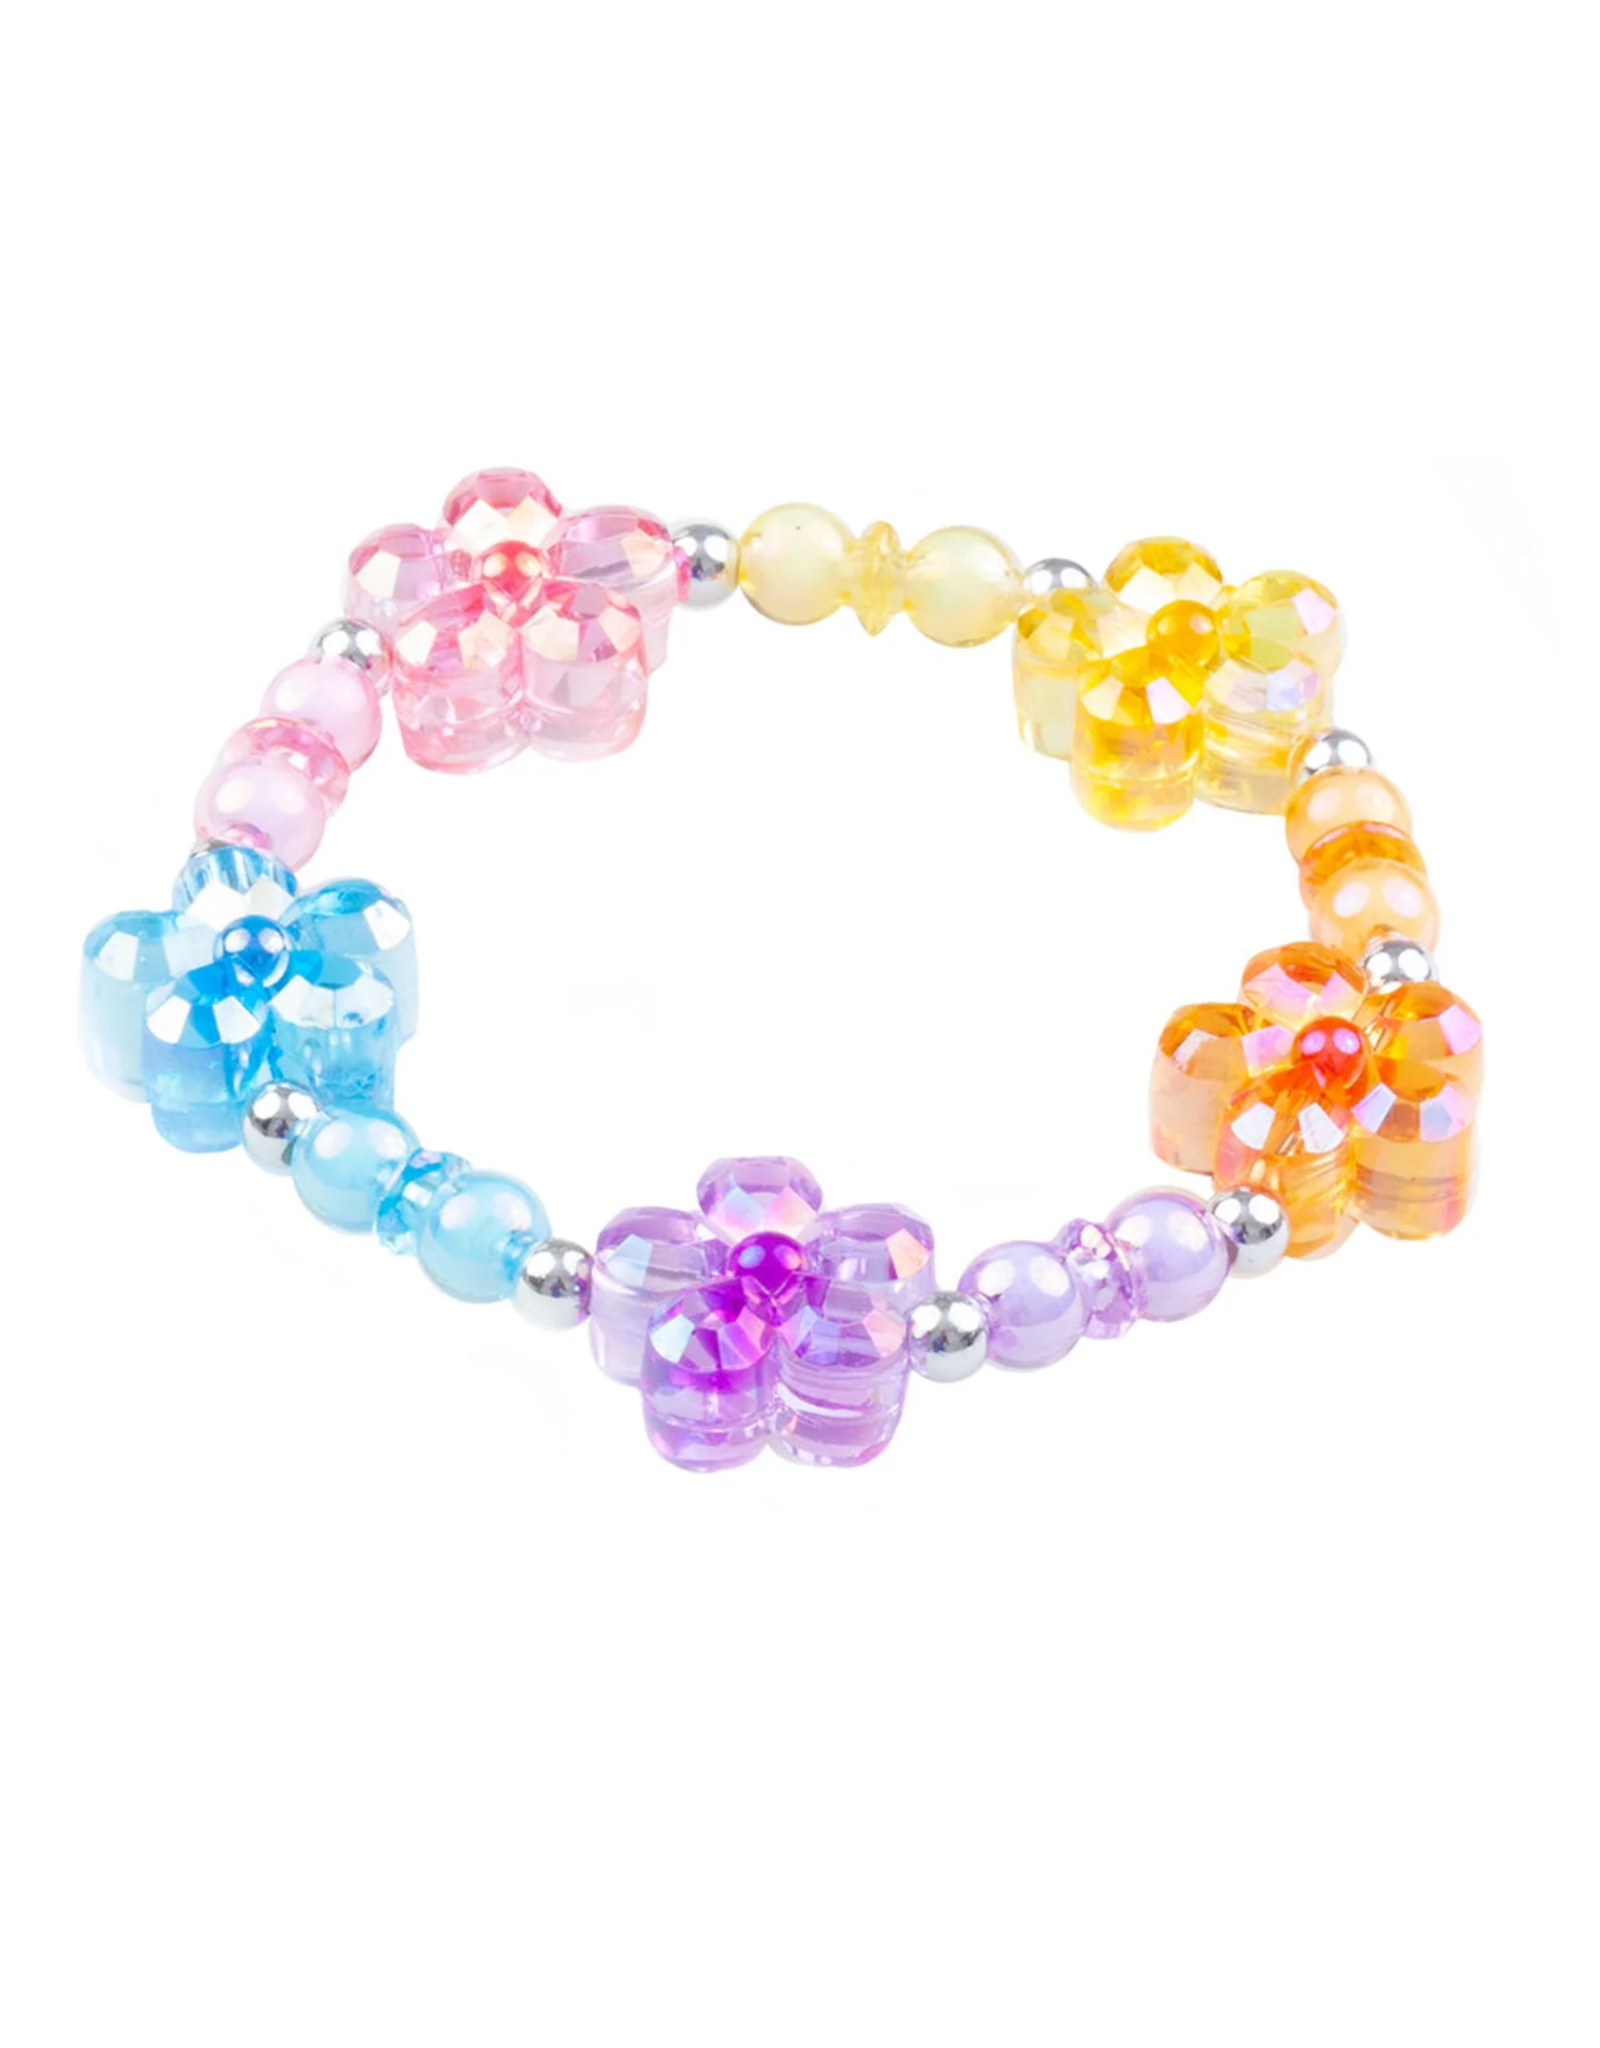 Flower Power Rainbow Bracelet